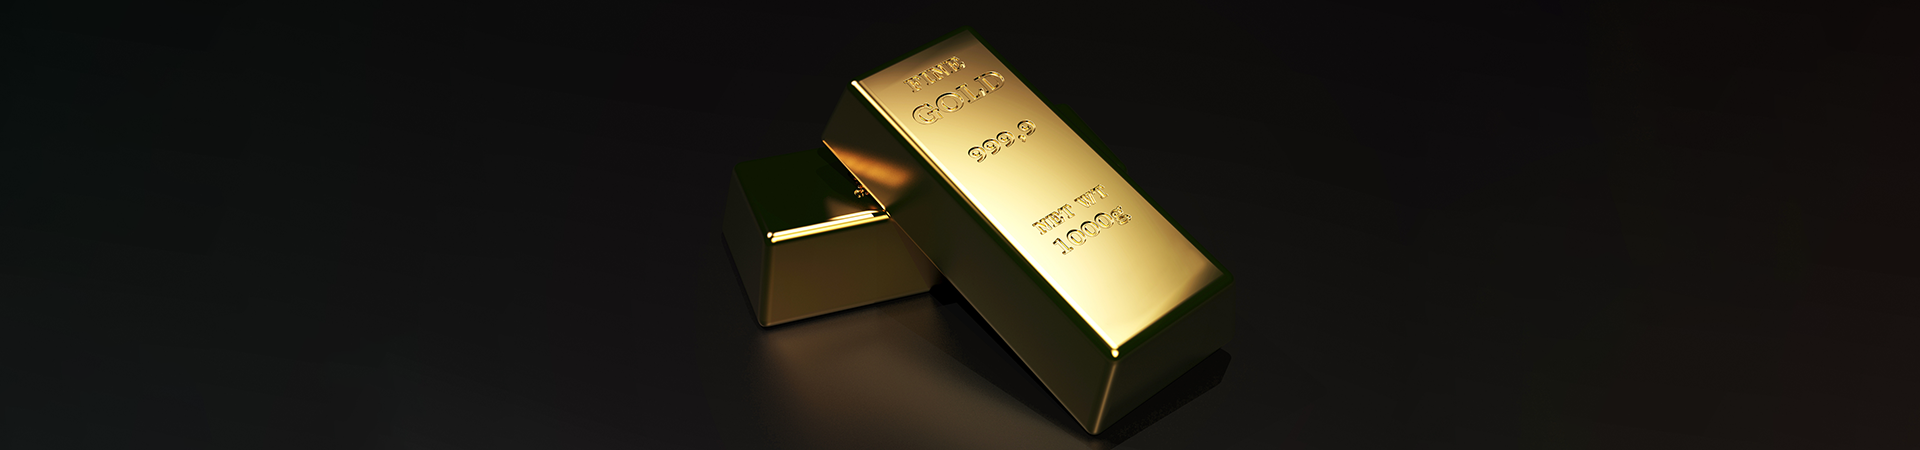 Sale of standardized gold bars